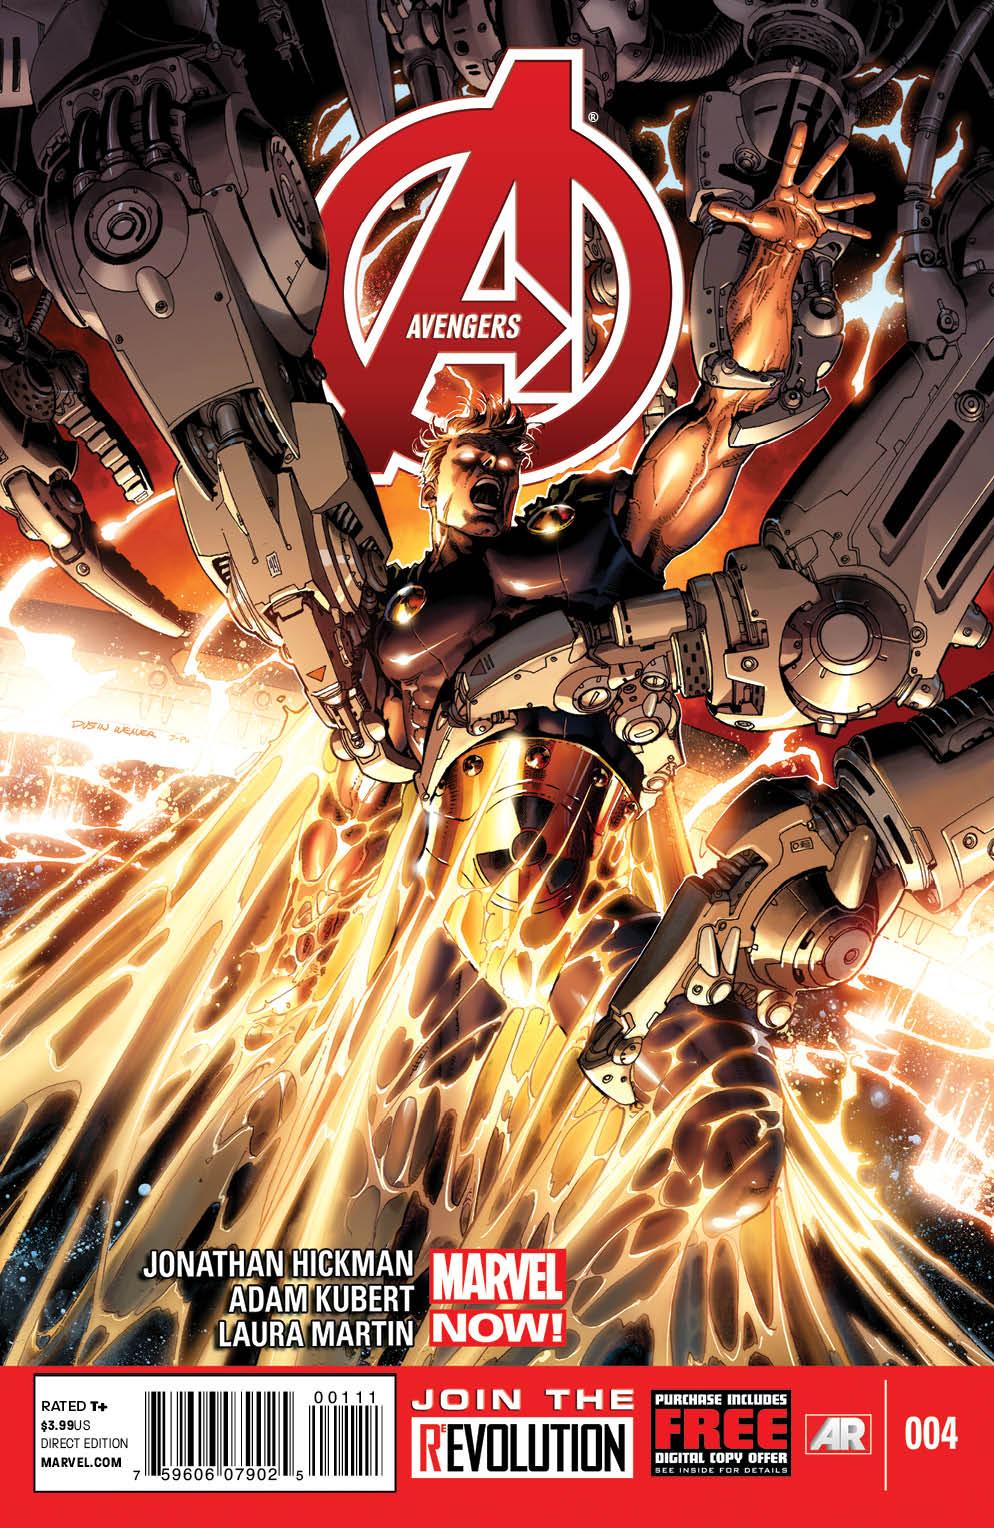 The Avengers Vol. 5 #4